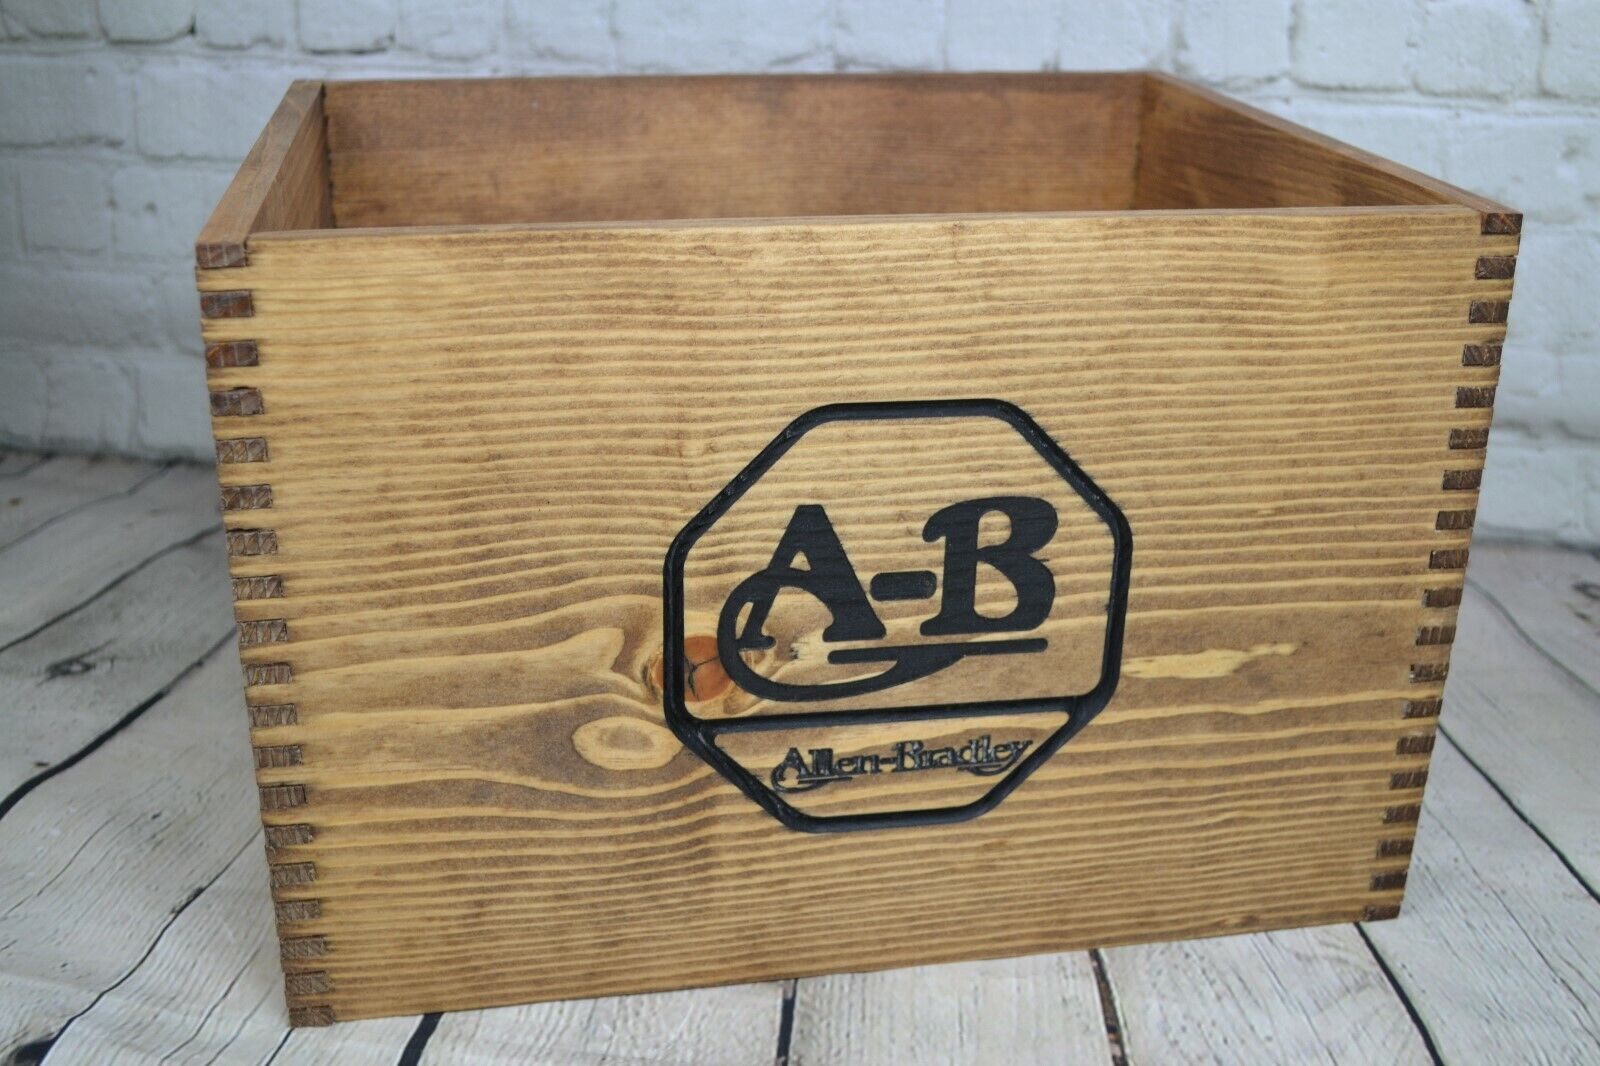 Vintage Allen Bradley Parts Crate Replica - Man-cave, Decor, Storage